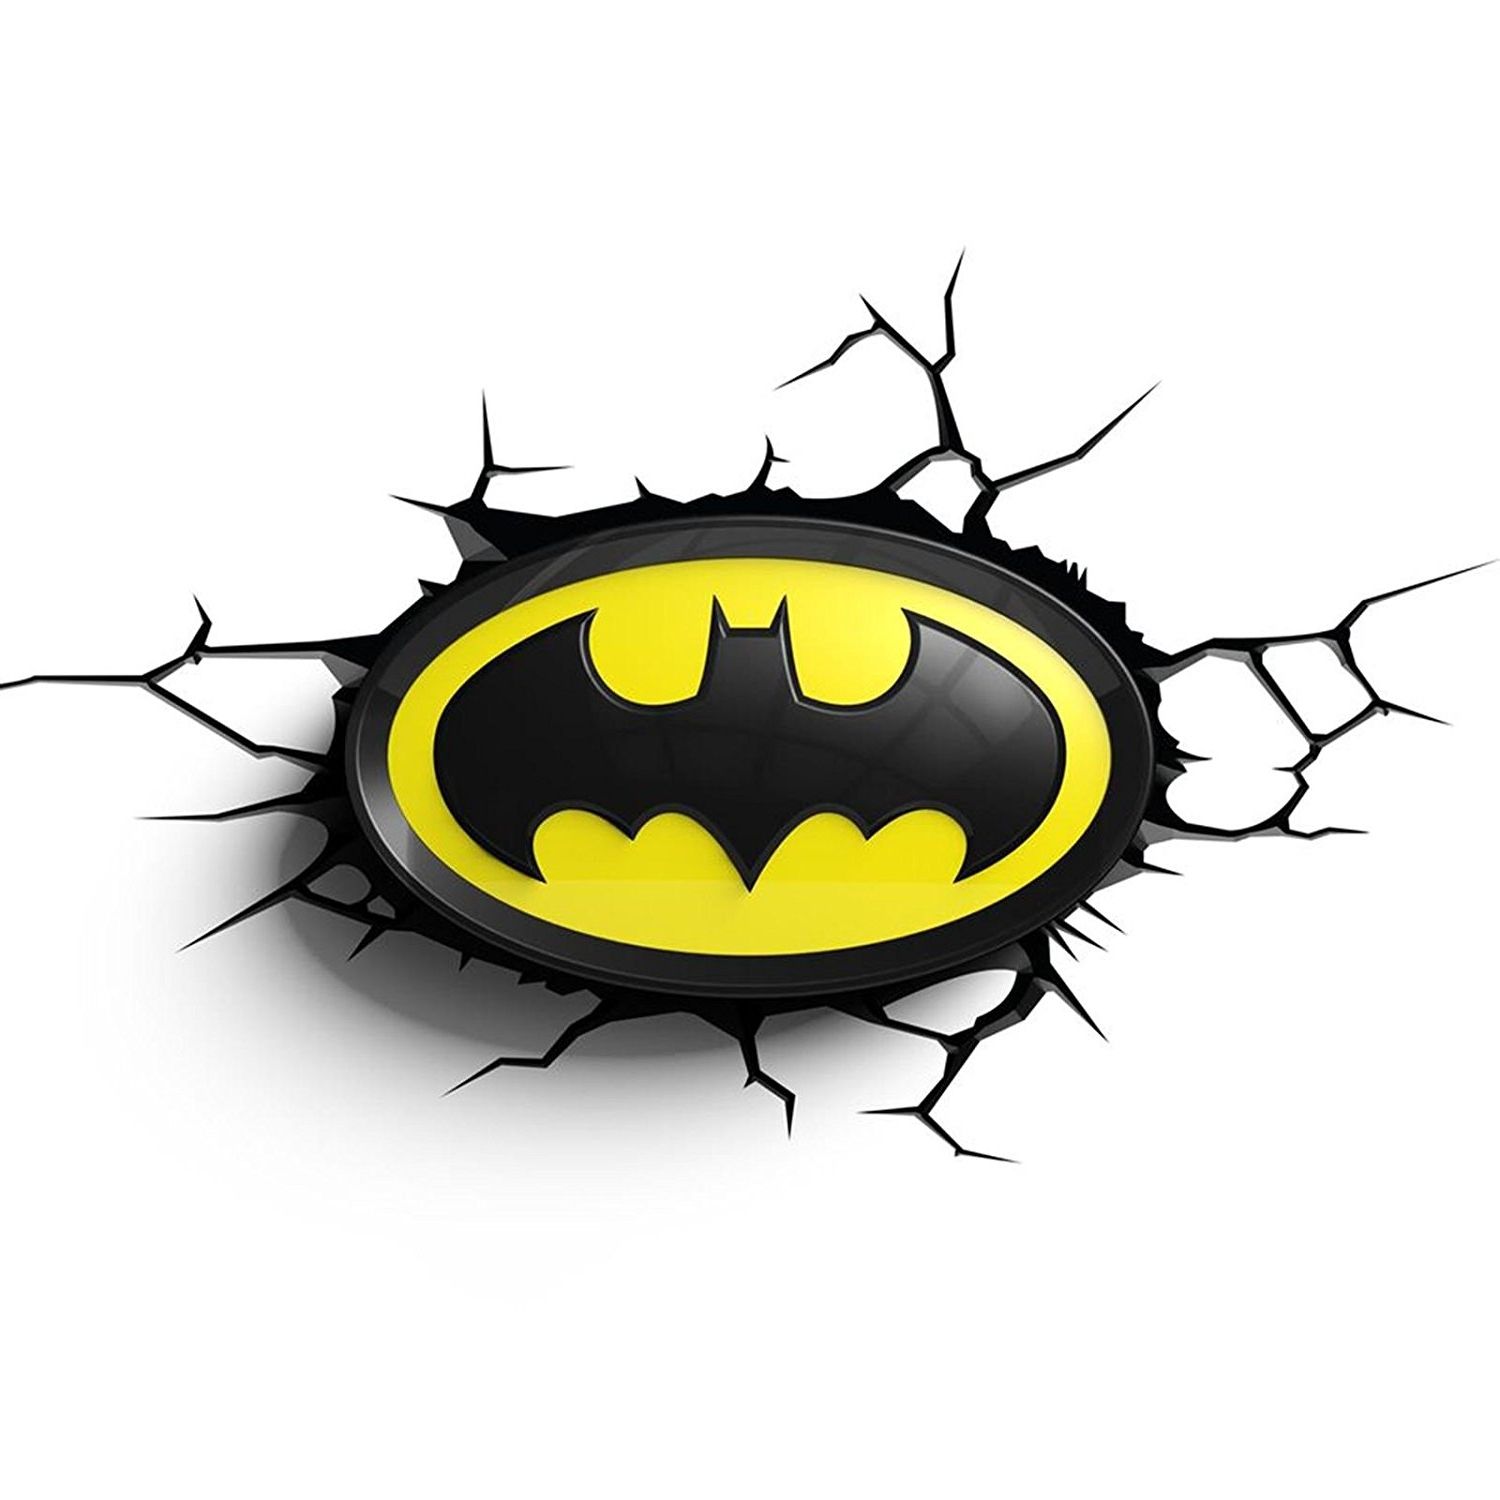 Batman 3d Wall Art With Regard To Favorite Amazon: Batman Logo 3d Led Wall Light: Home & Kitchen (View 8 of 15)